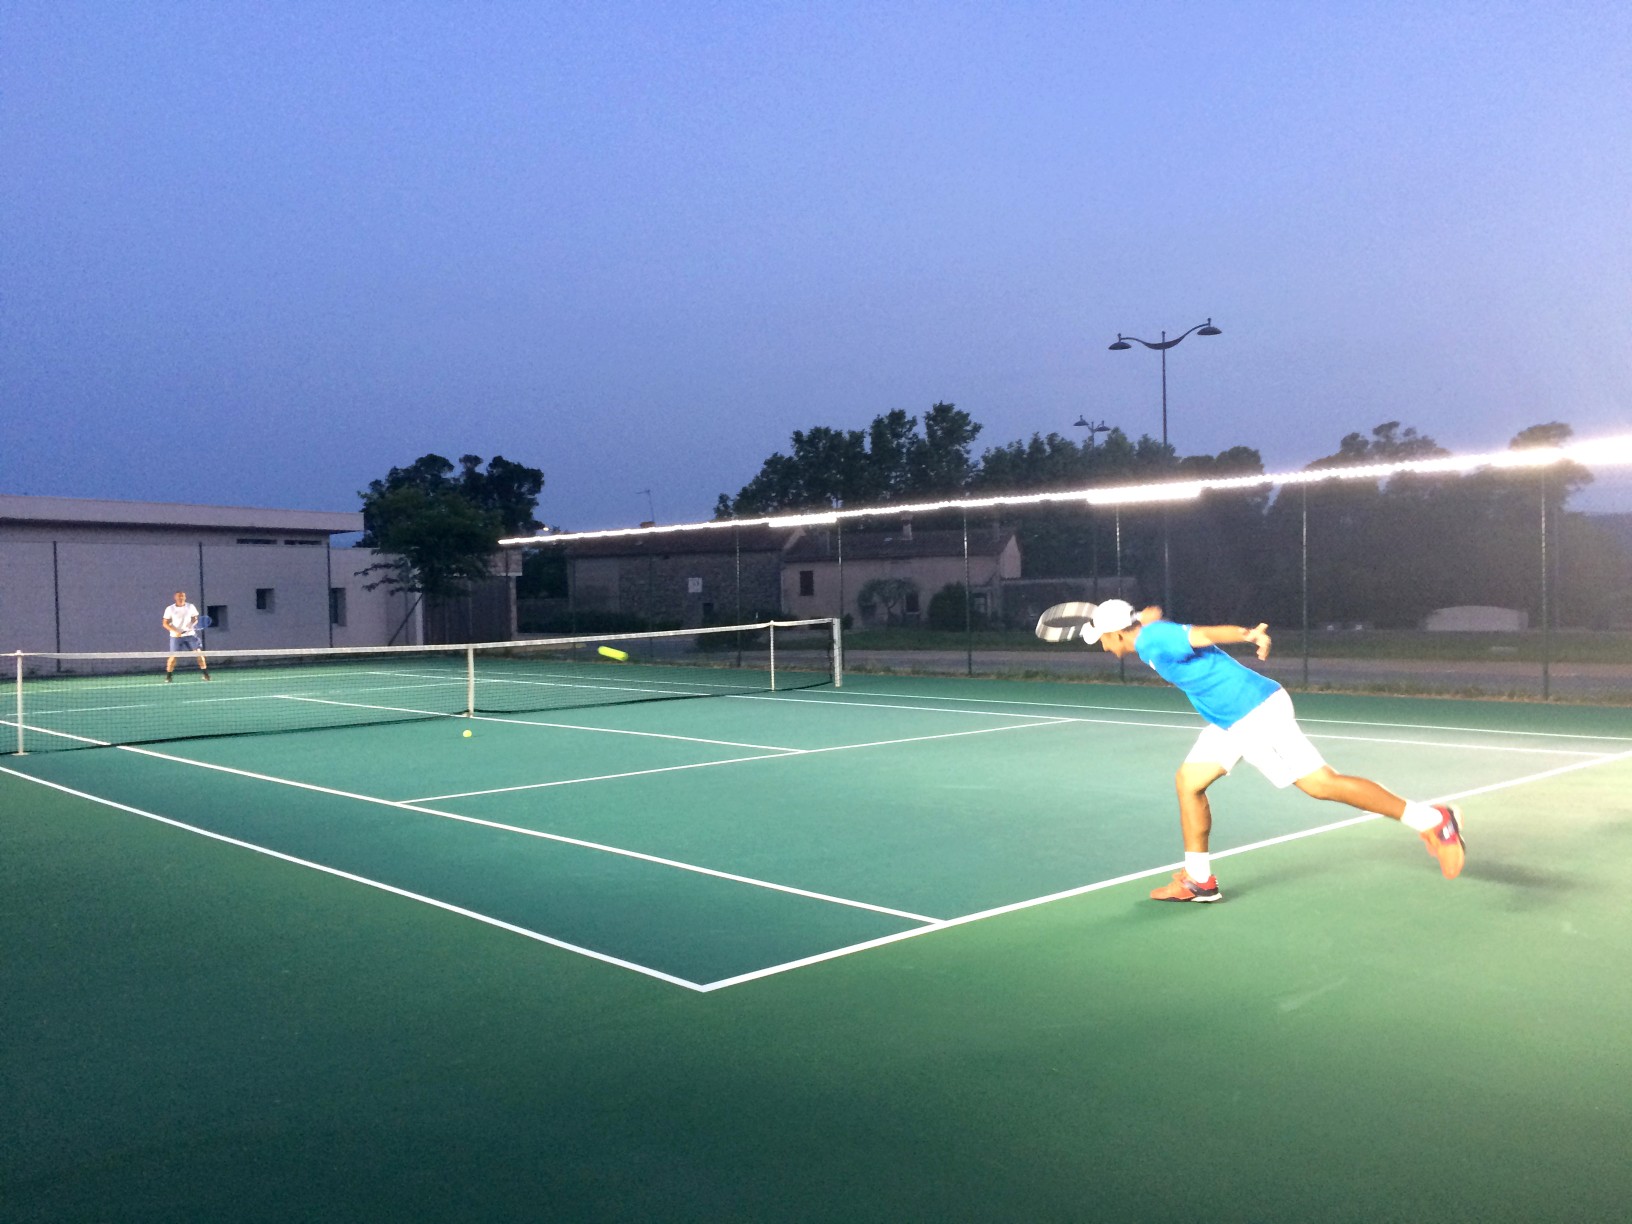 Tweener®’s innovative tennis court floodlights provide guaranteed glare-free play.